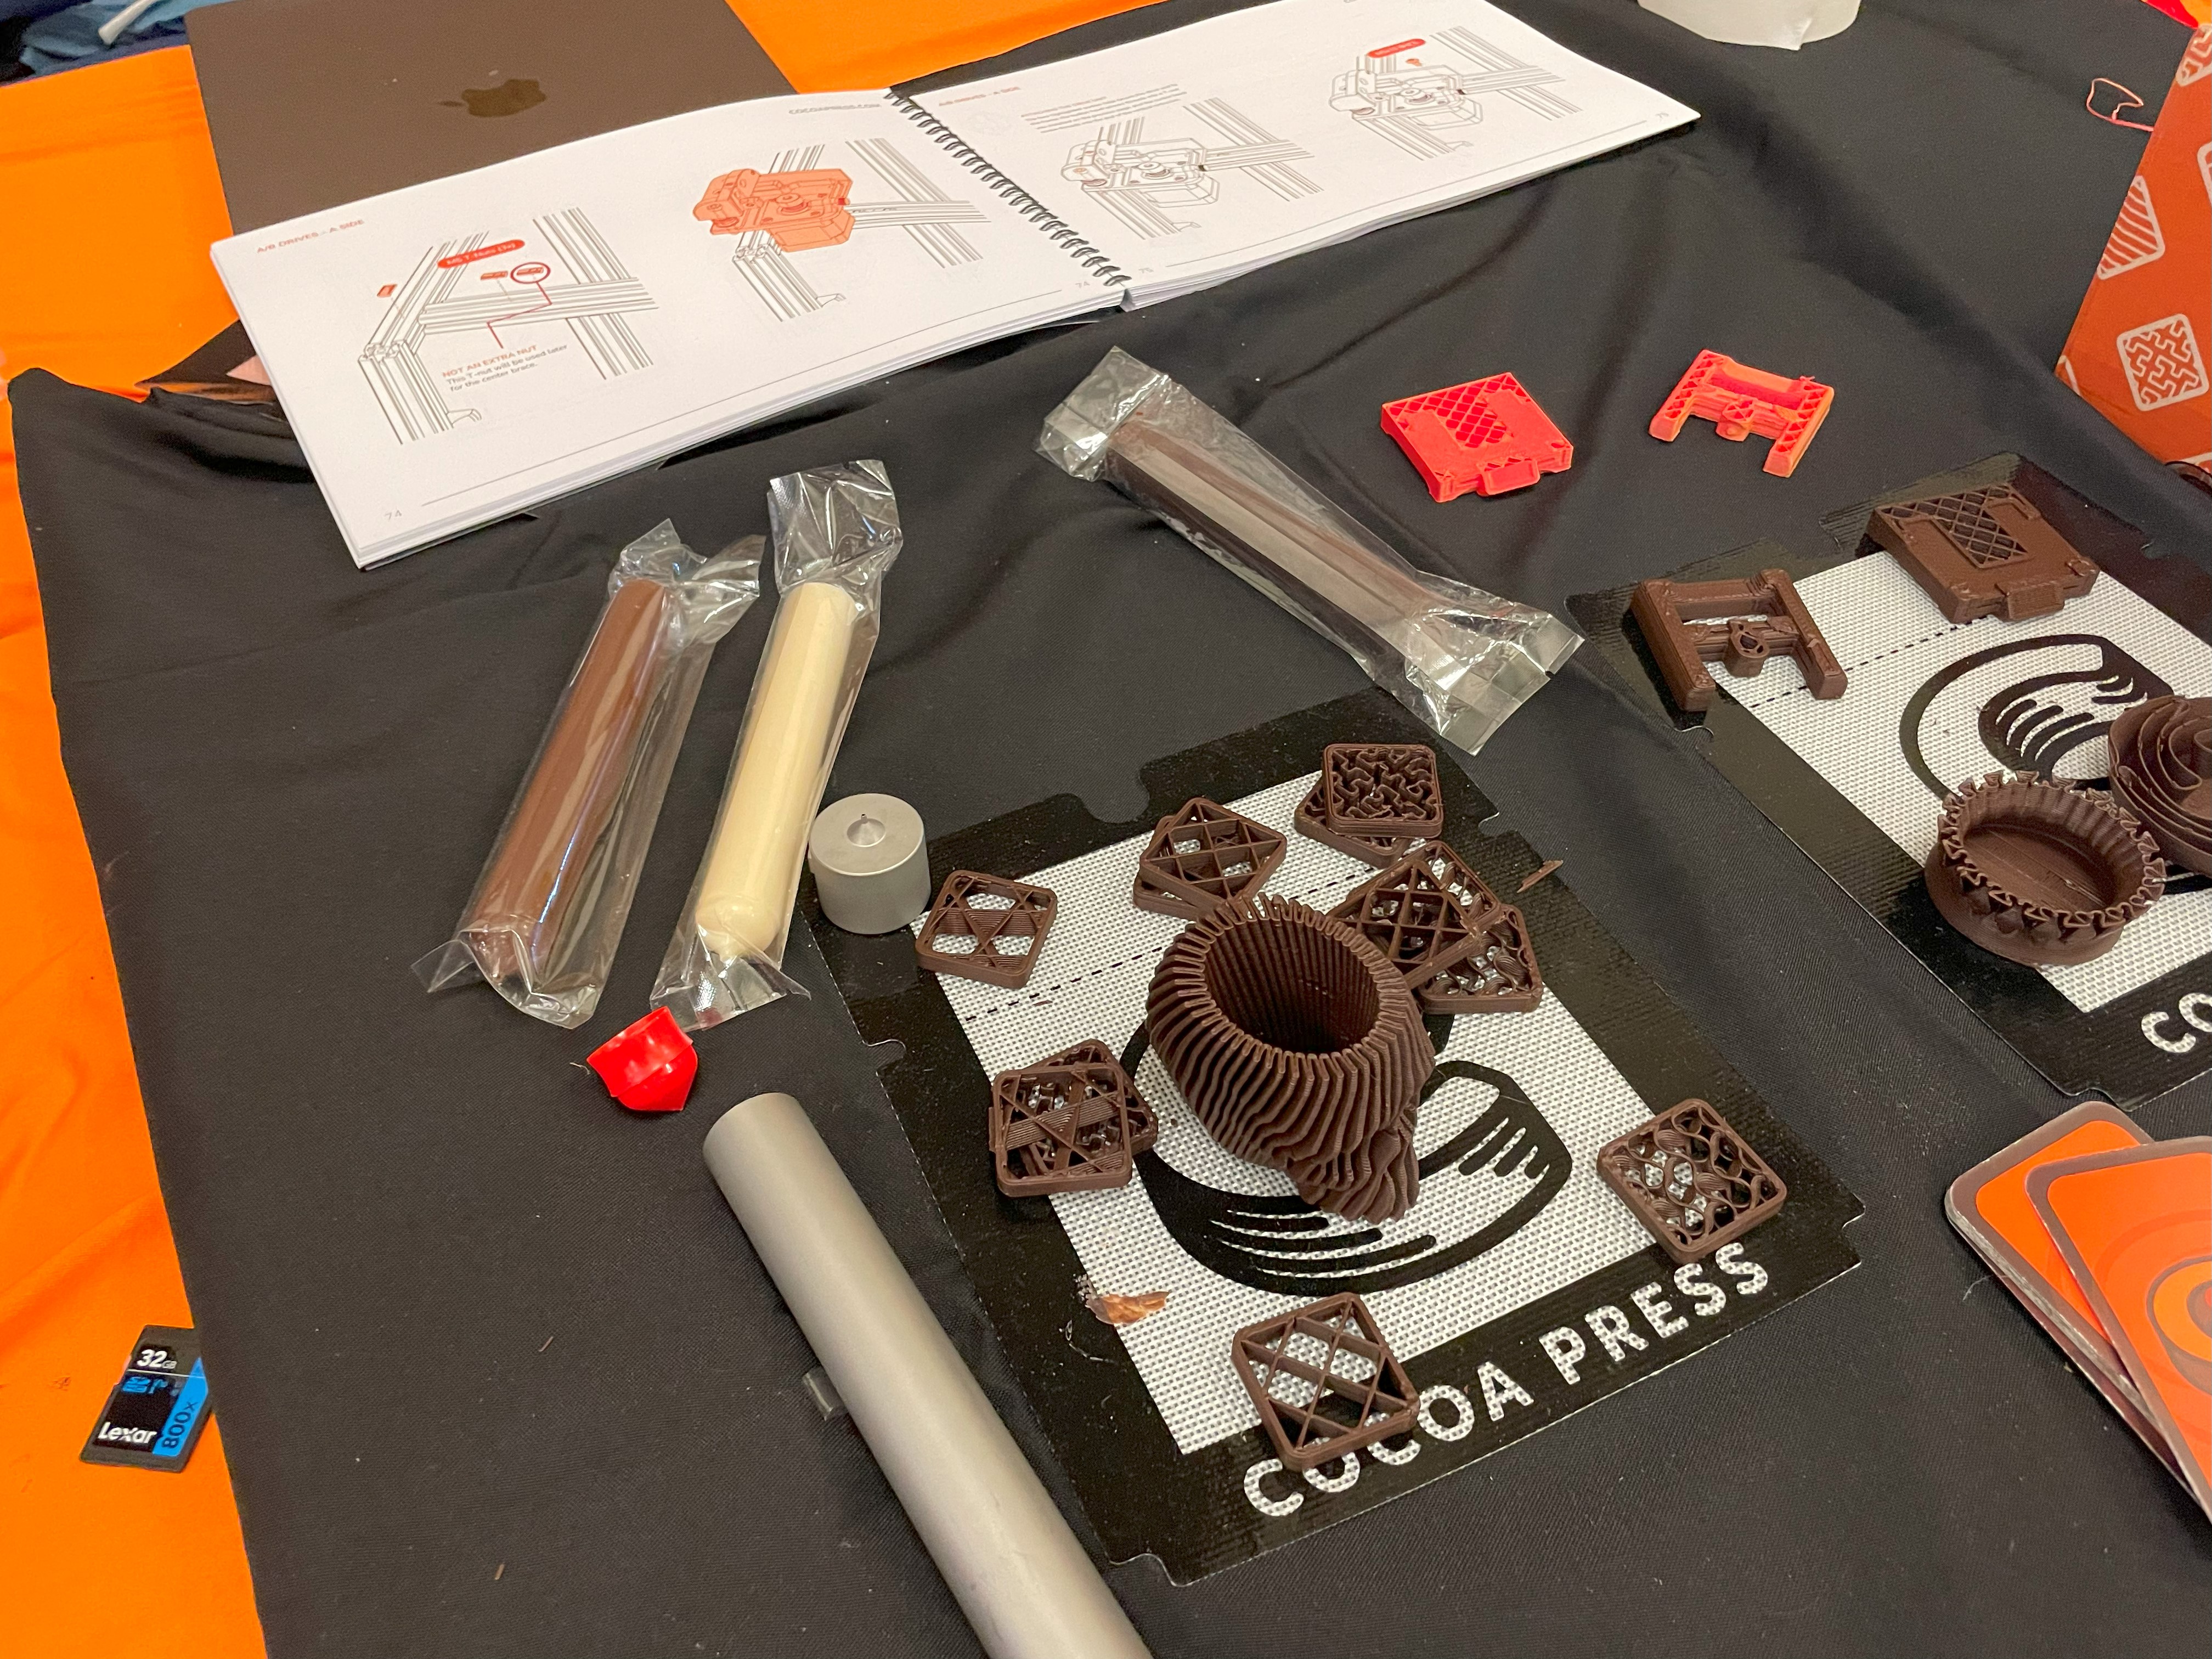 Cocoa Press: 3D printing chocolate